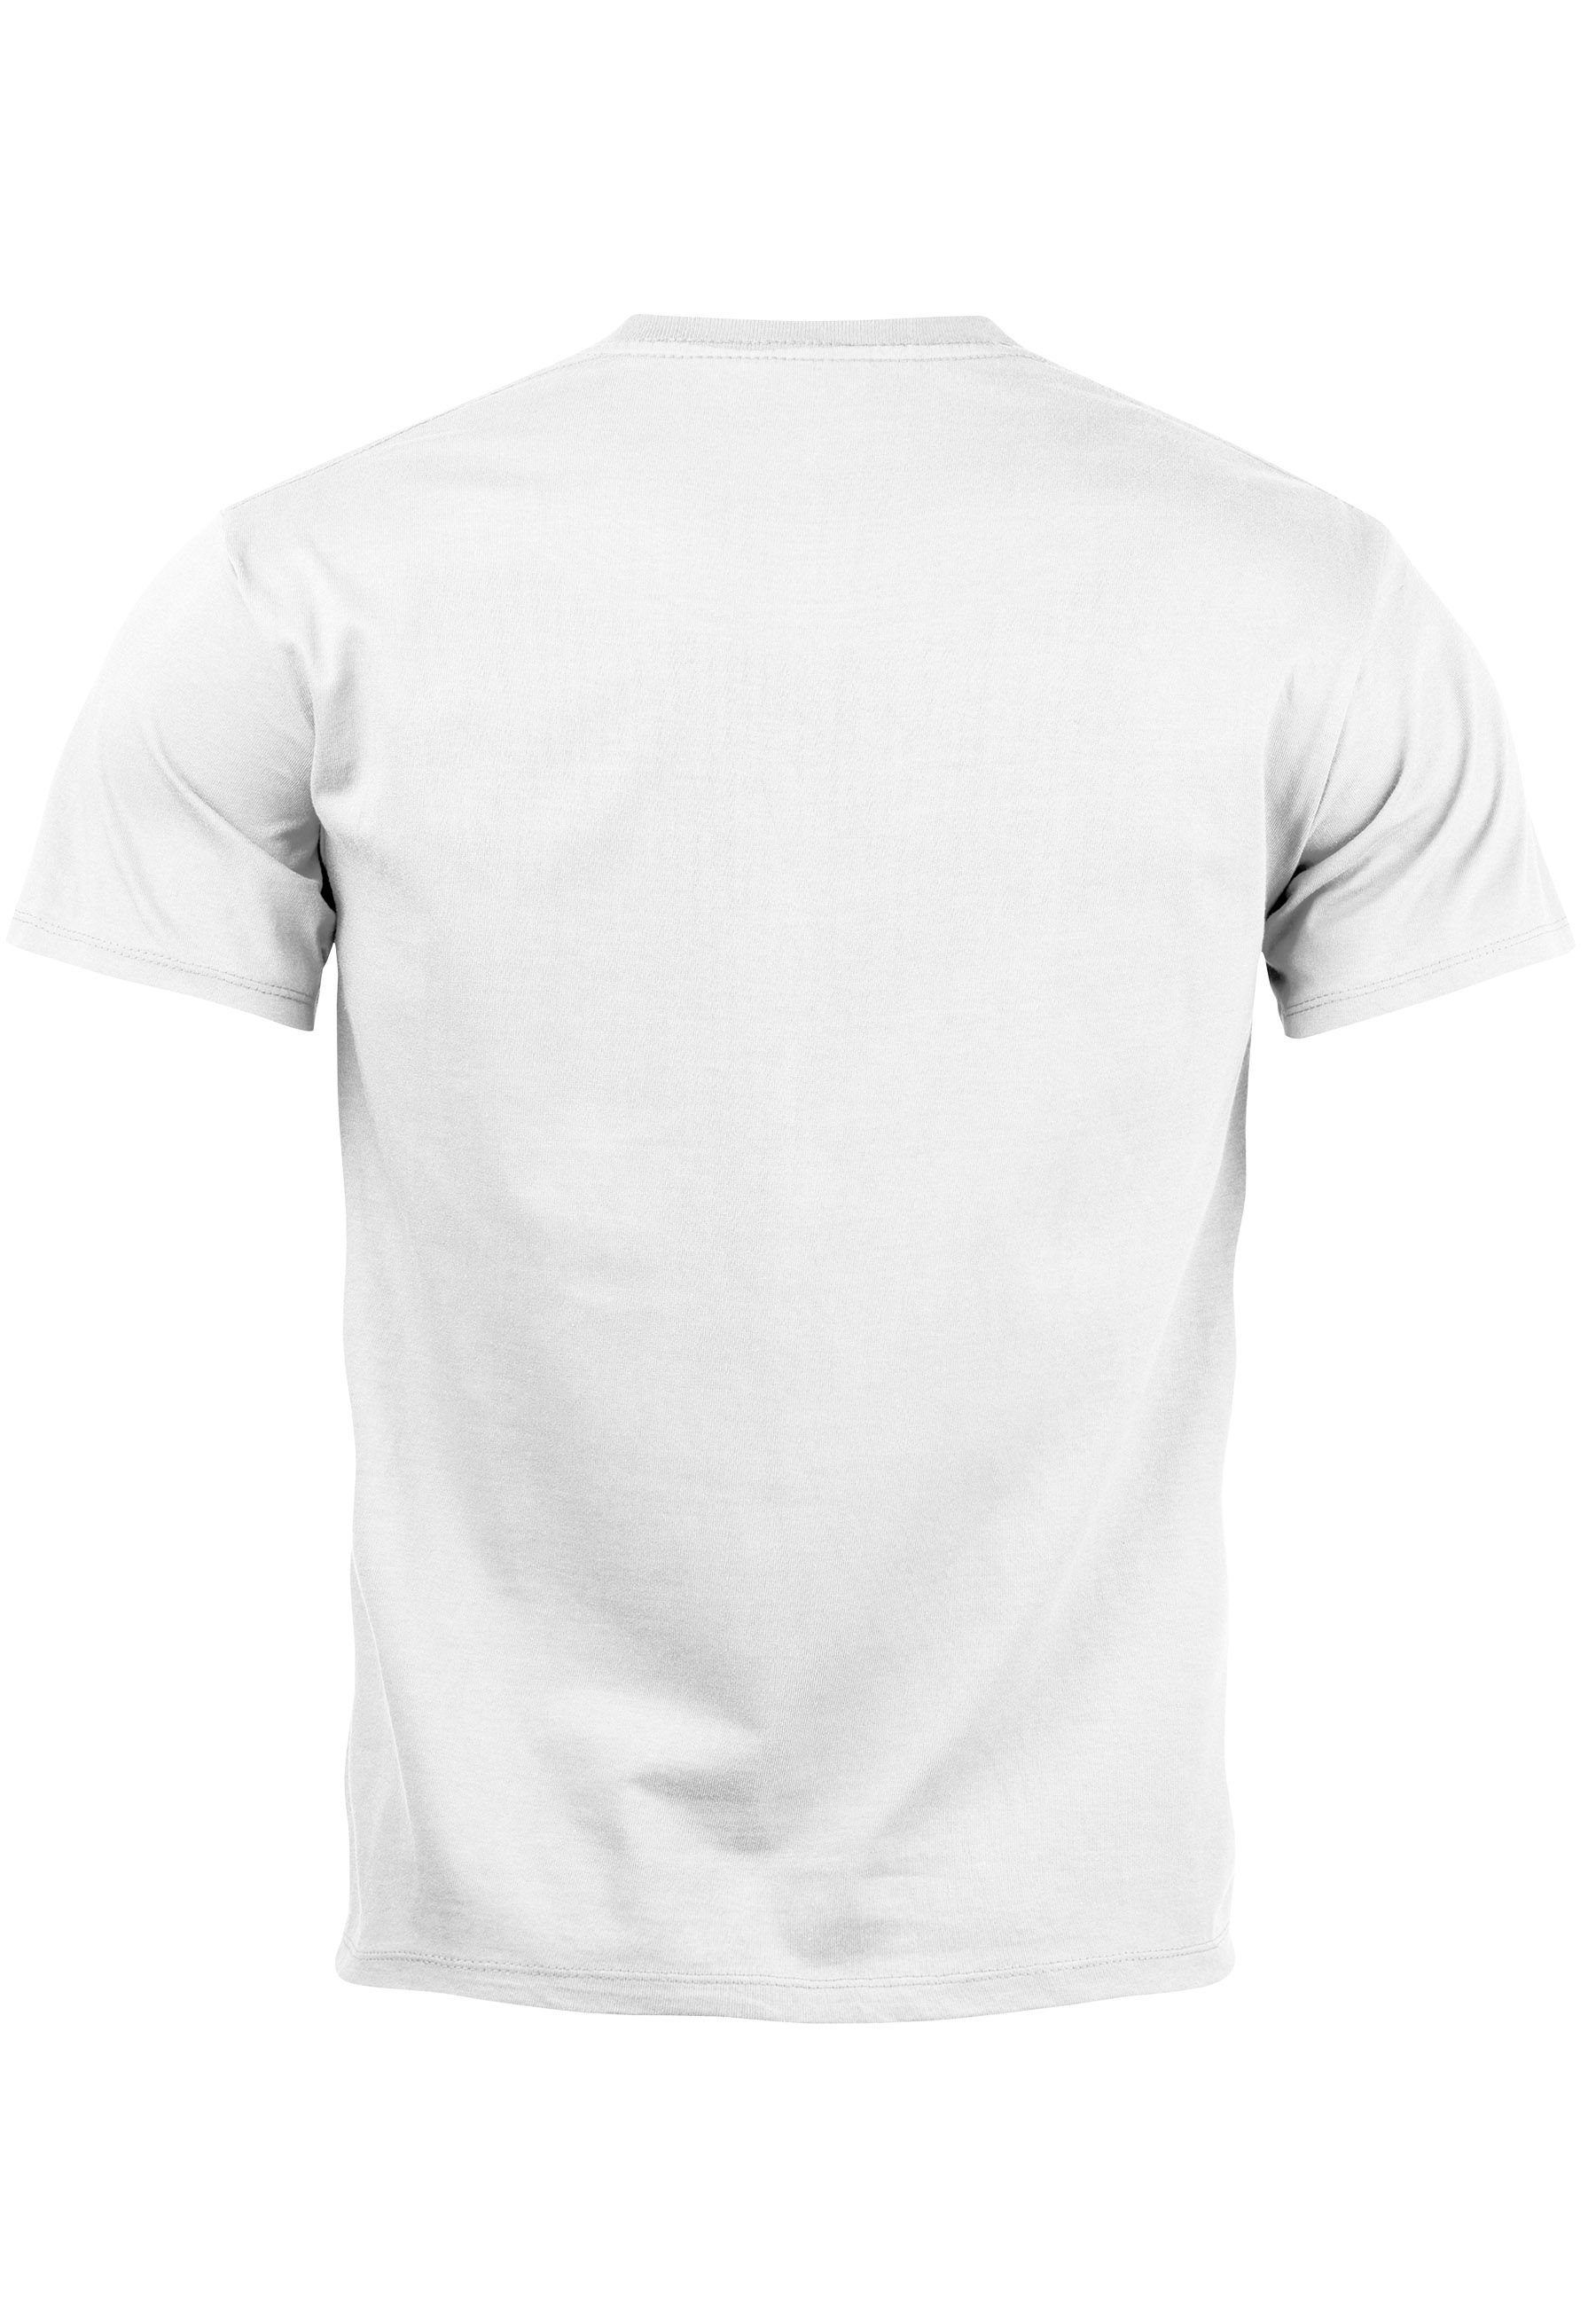 Strand Print-Shirt Neverless Sommer mit Beach Fashio Herren weiß Print Print T-Shirt Welle Sonne Style Logo